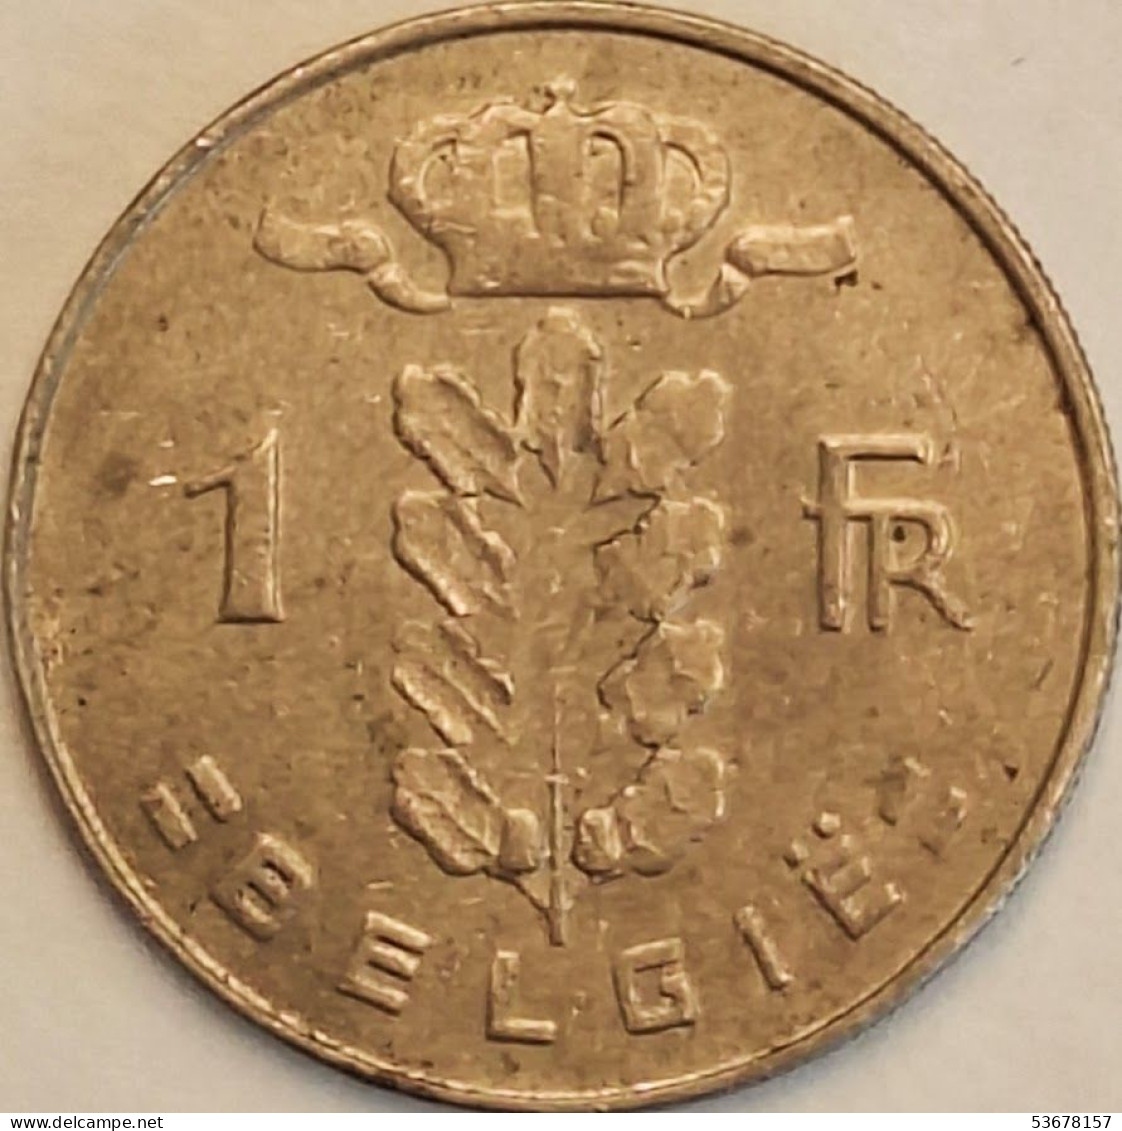 Belgium - Franc 1965, KM# 143.1 (#3131) - 1 Franc